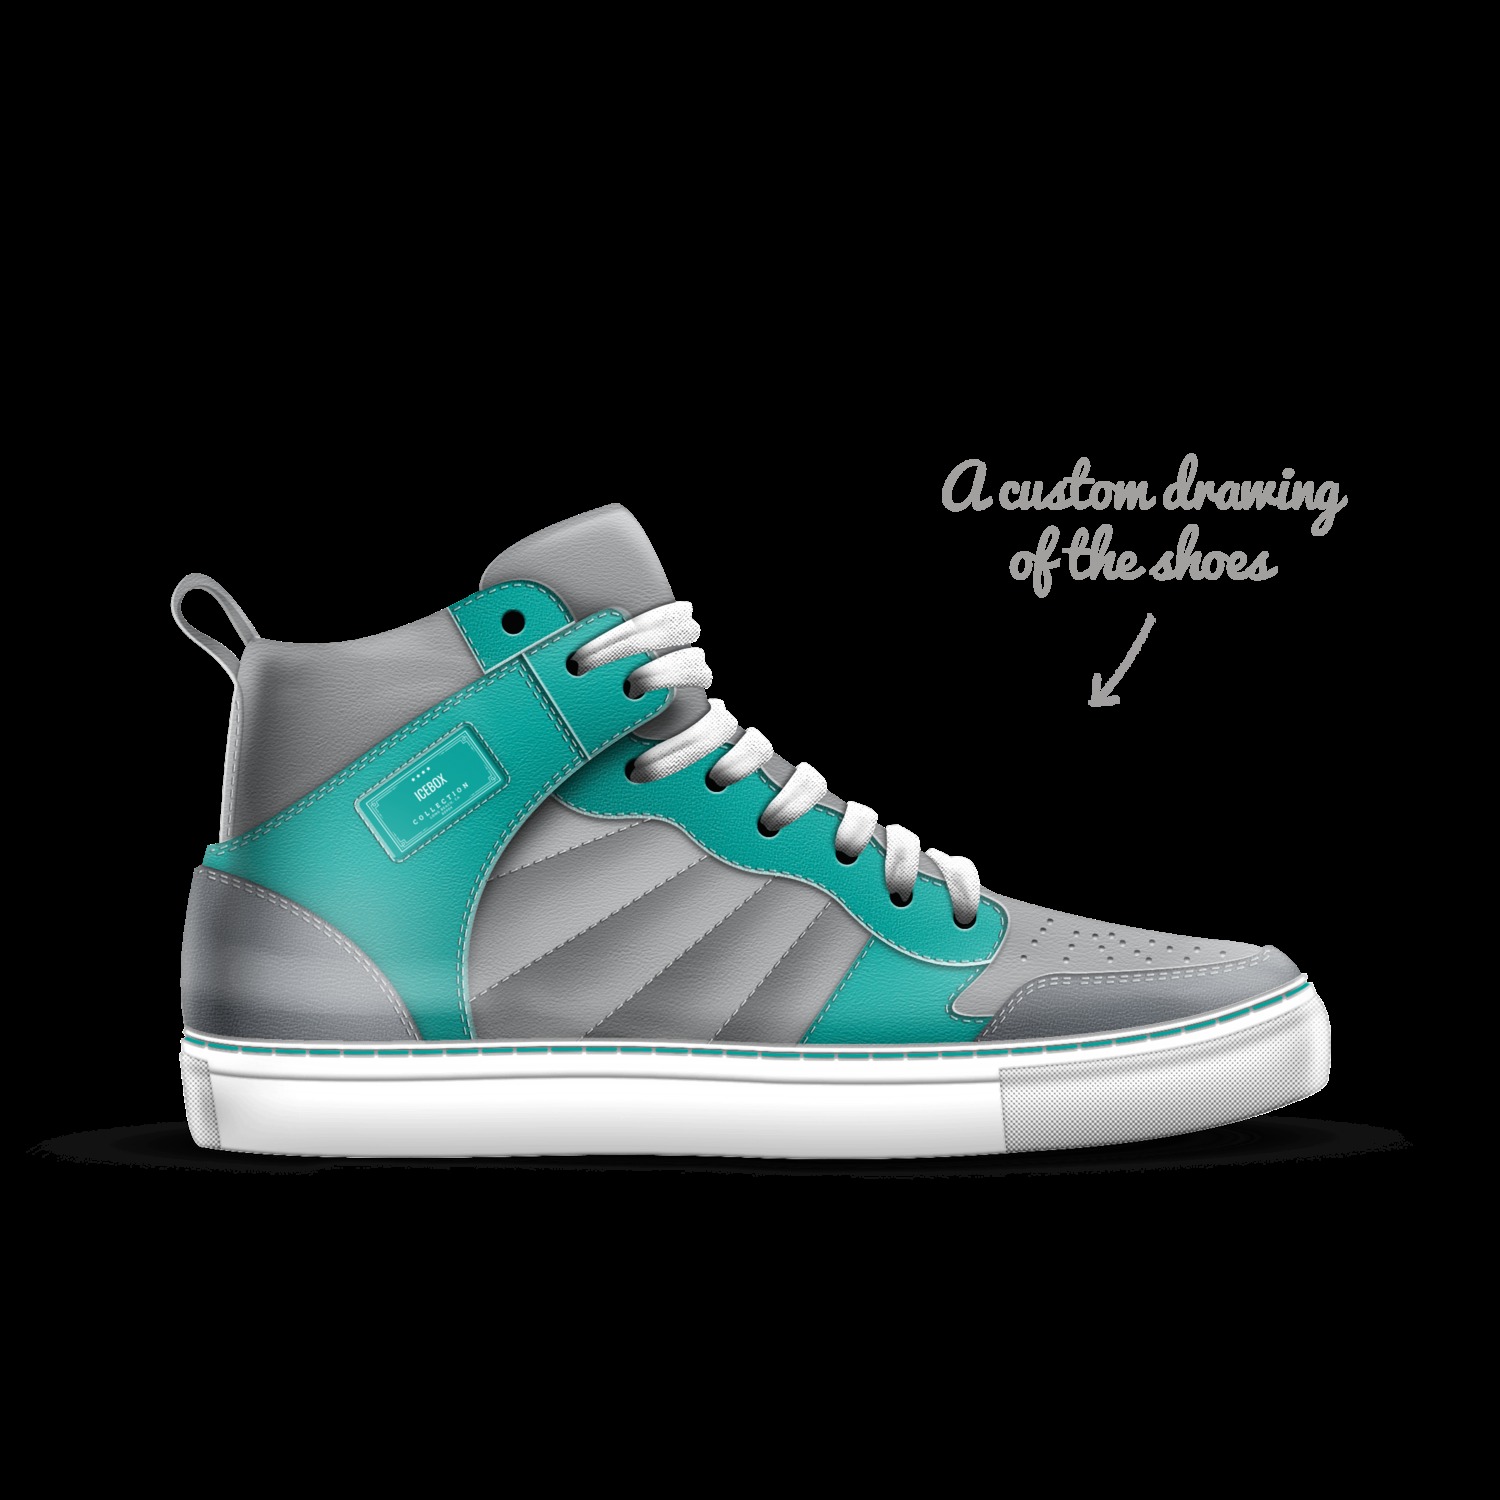 IceBox | A Custom Shoe concept by Josie 